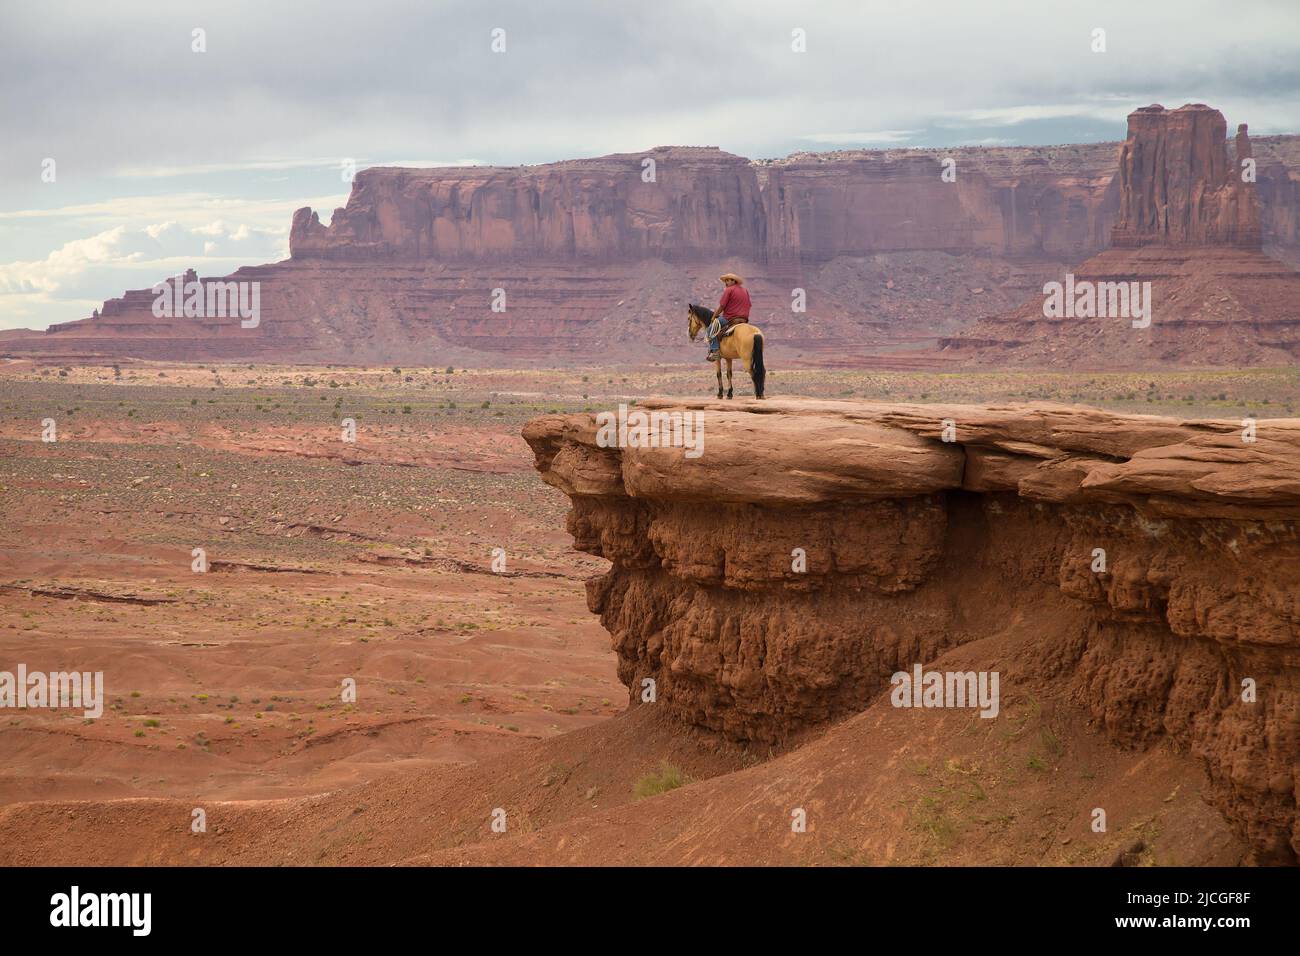 Oljato-Monument Valley, Arizona - 4. September 2019: Mann auf einem Pferd am John Ford Point in Monument Valley, Arizona, USA. Stockfoto